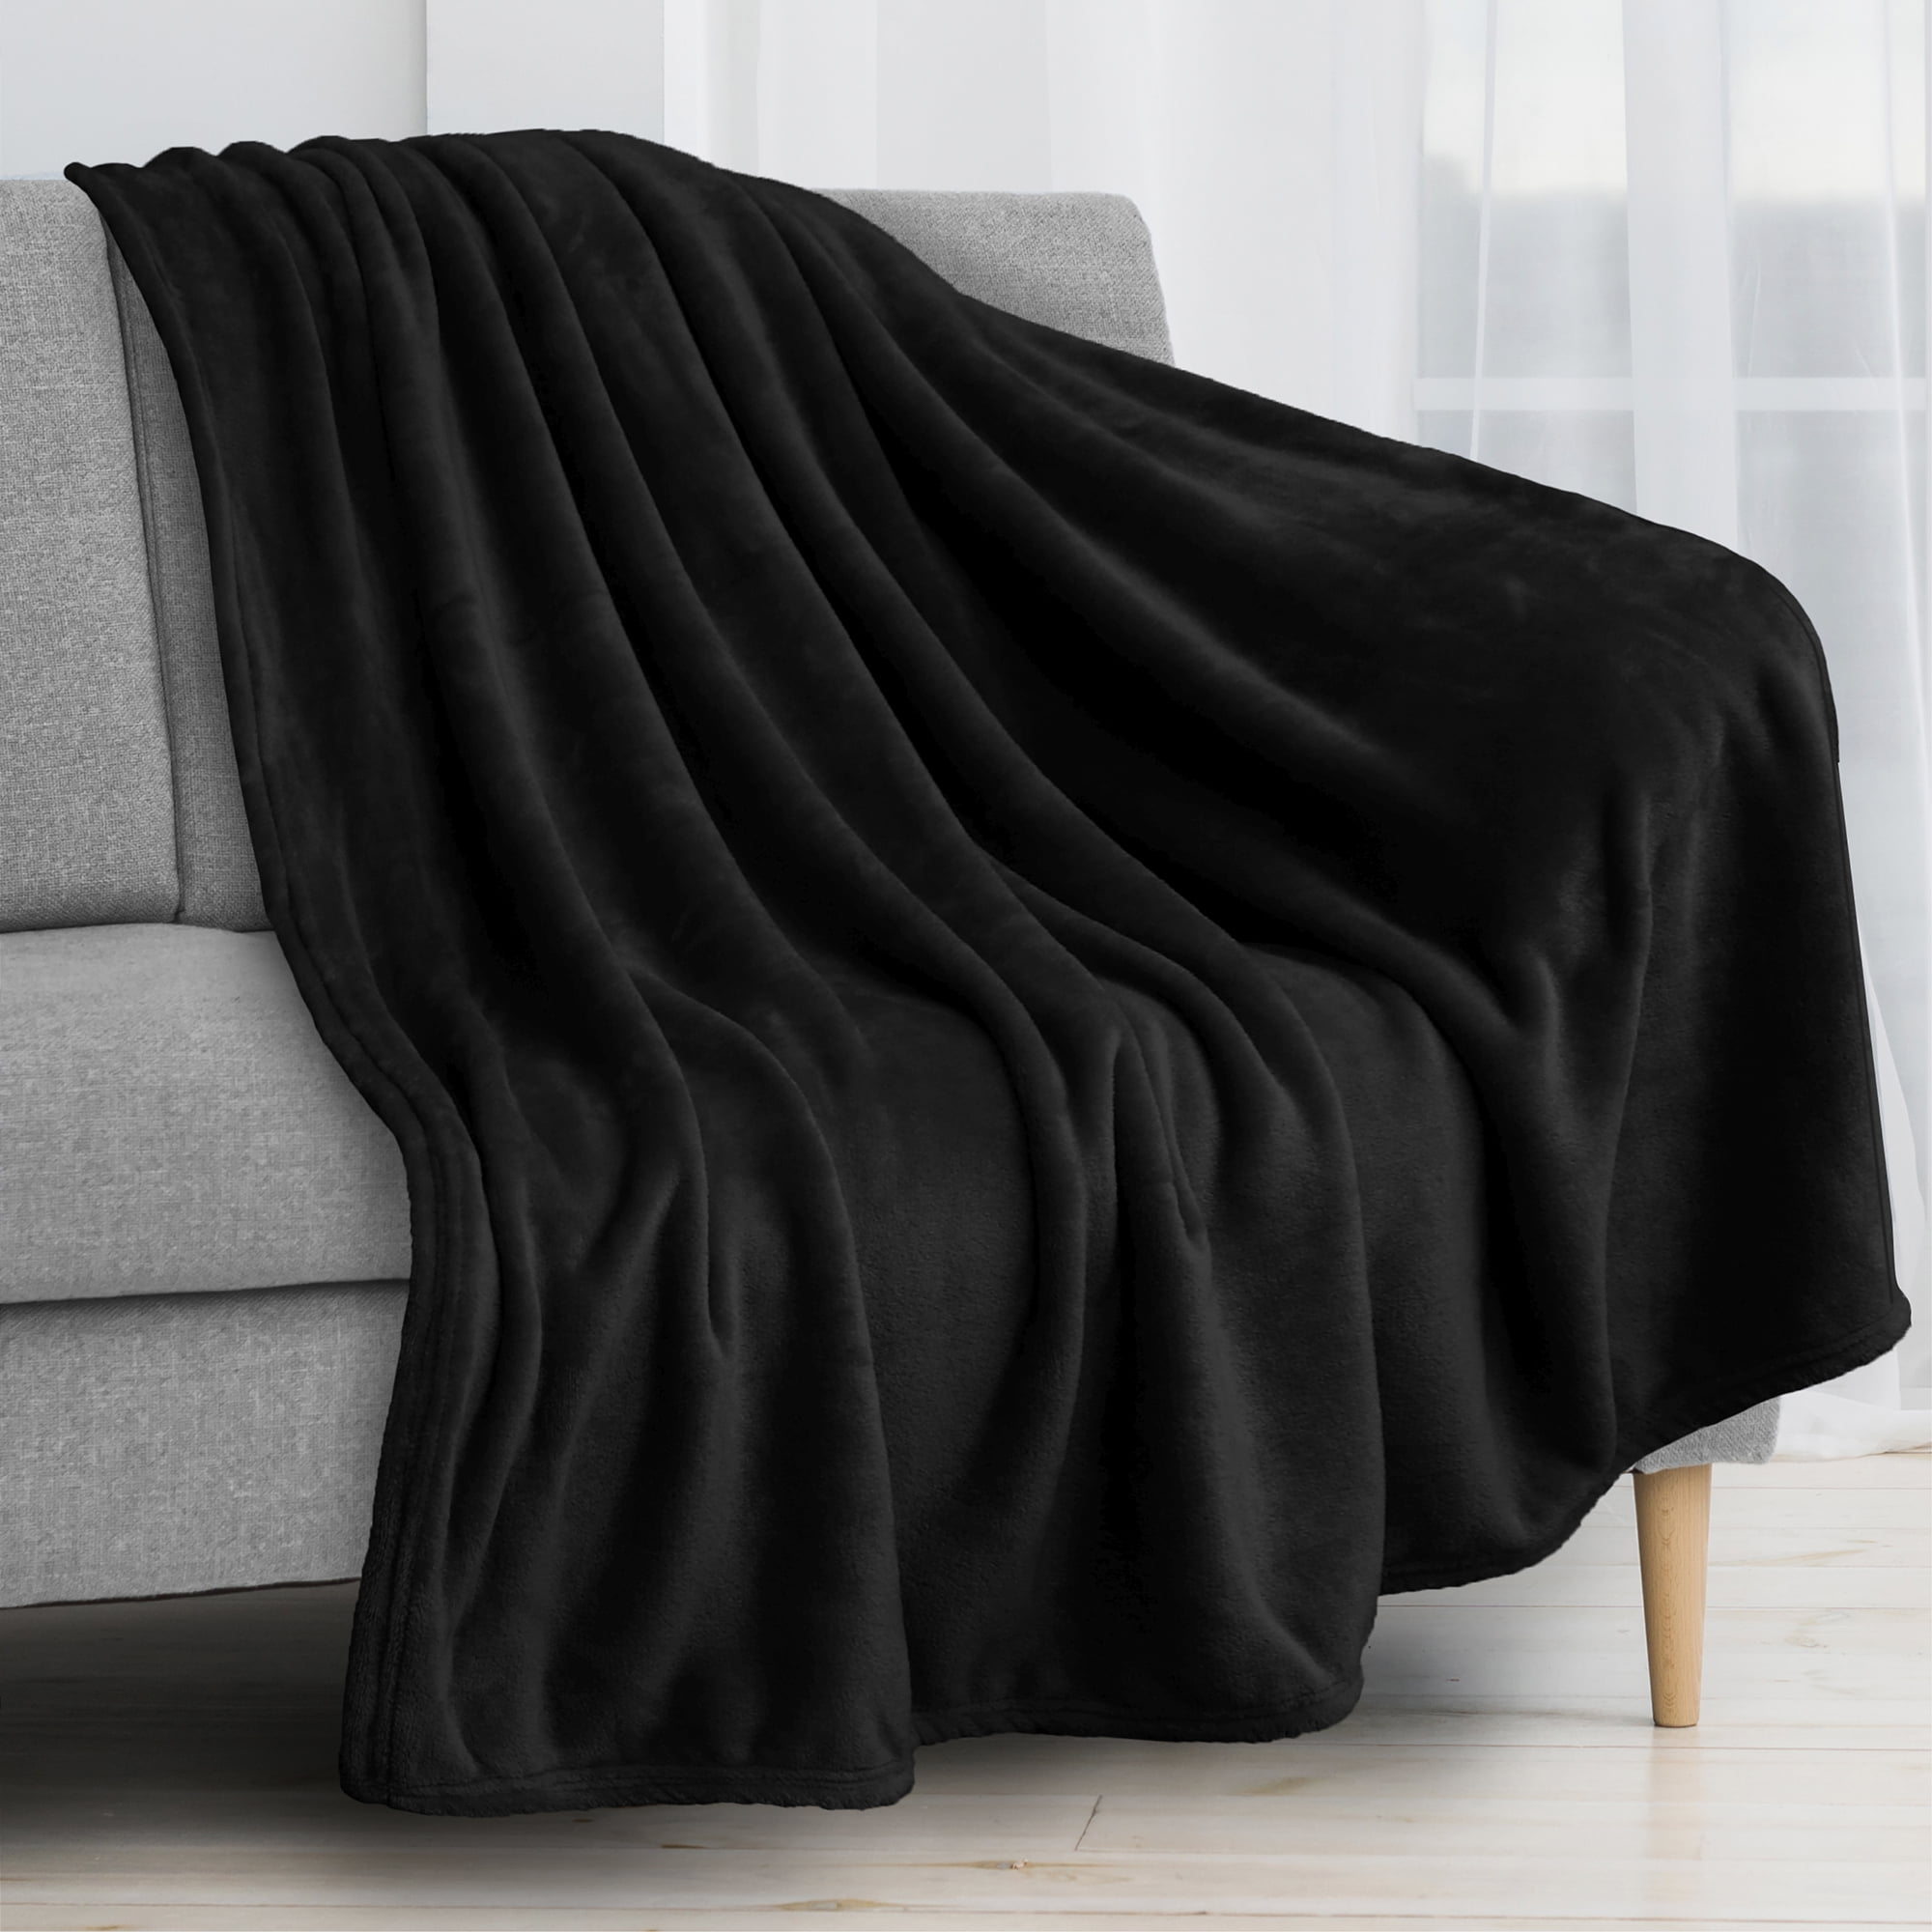 50 x 60 Inches Super Soft Microfiber Plush Blanket Throw RECYCO Flannel Fleece Throw Blanket for Couch Dark Grey Fuzzy Cozy Luxury Blanket for All Seasons